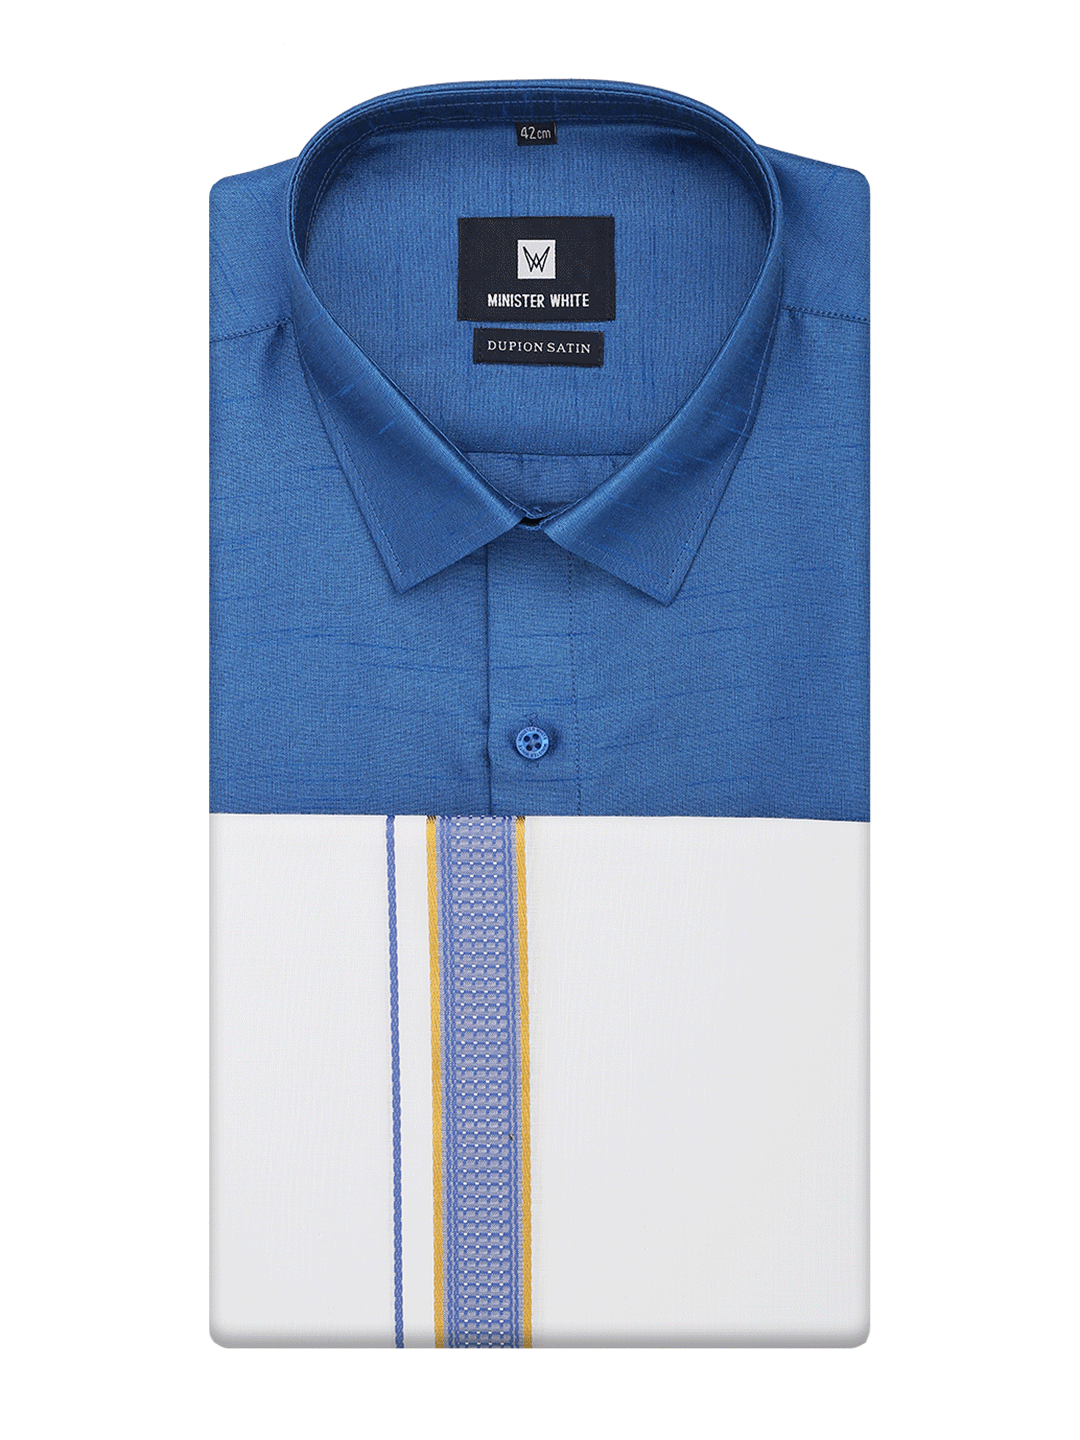 Mens Sky Blue Dupion Satin Color Shirt with Matching Border Dhoti Combo Gora